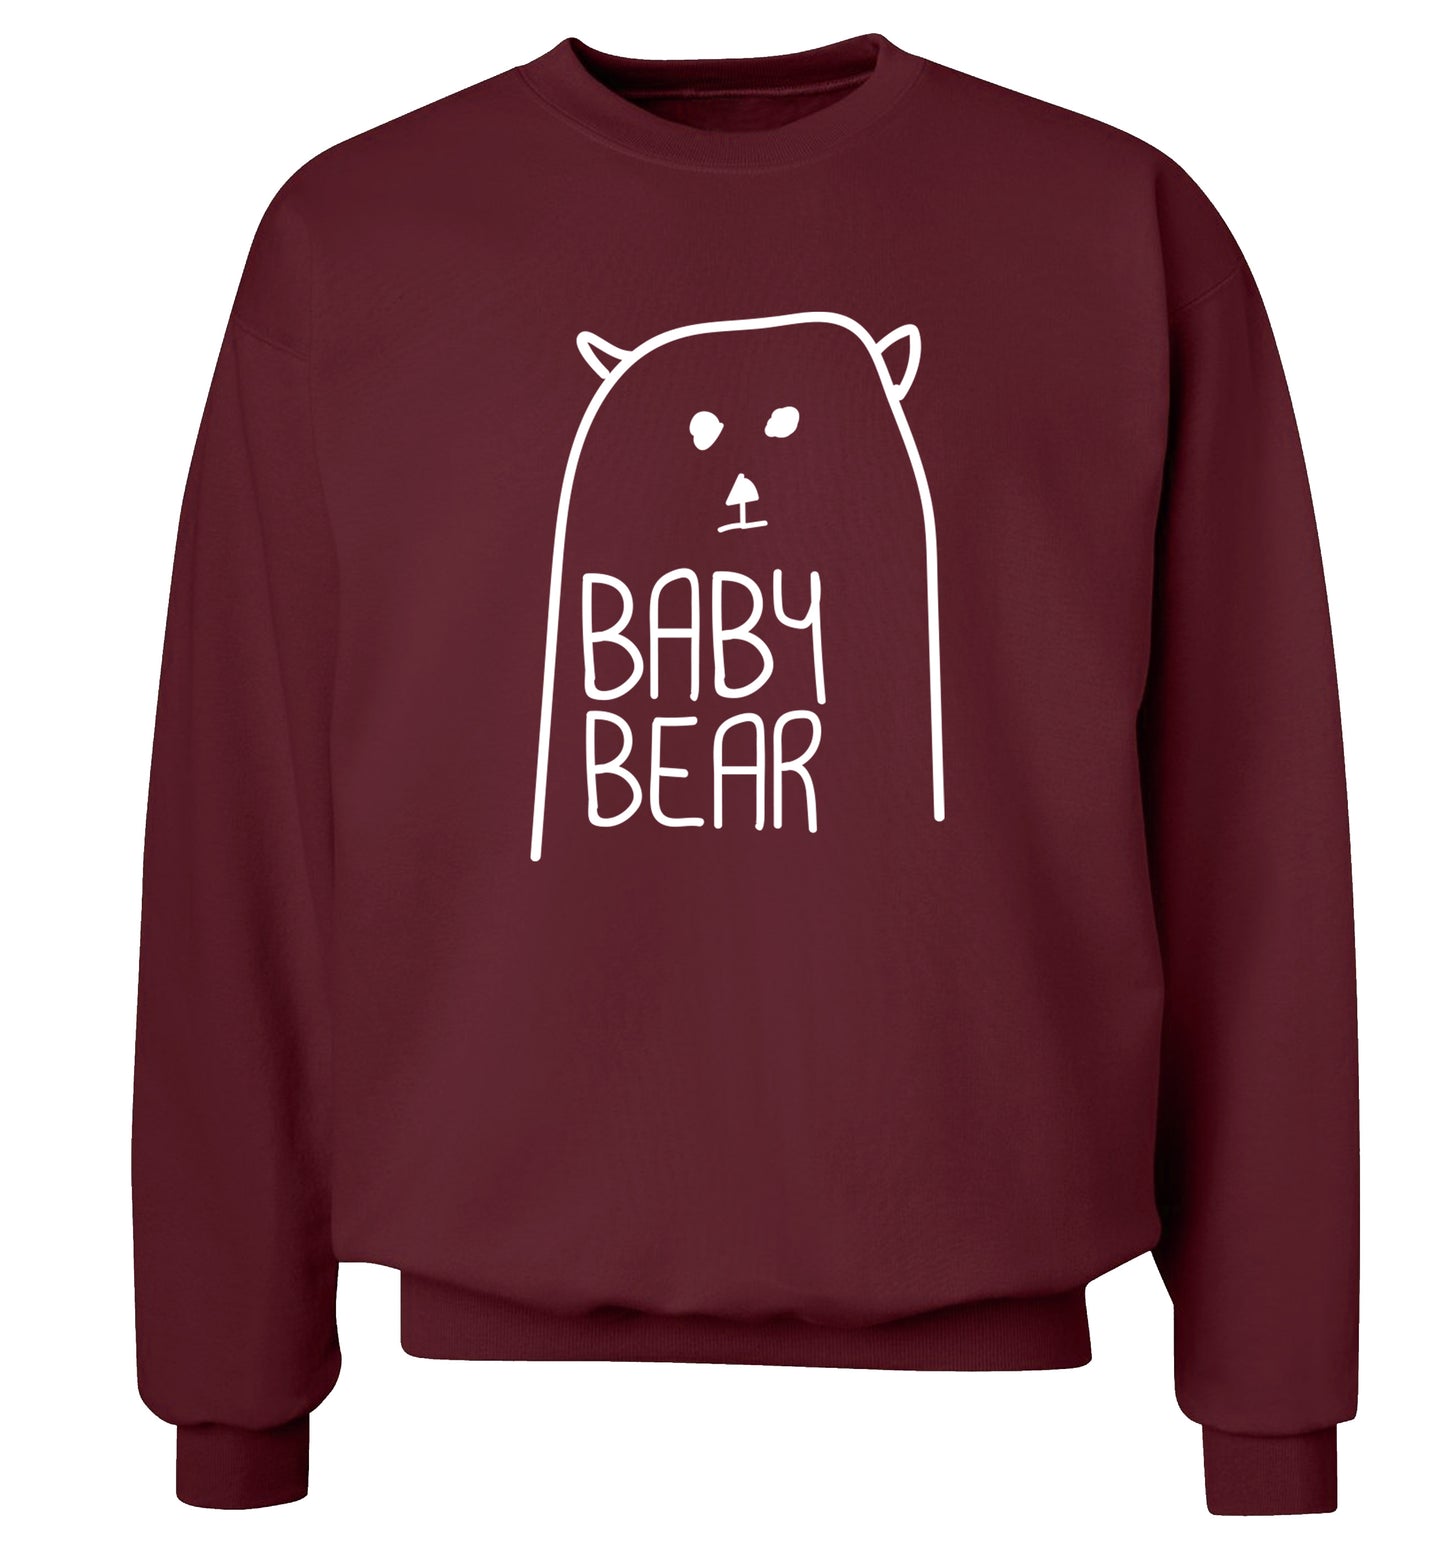 Baby bear Adult's unisex maroon Sweater 2XL